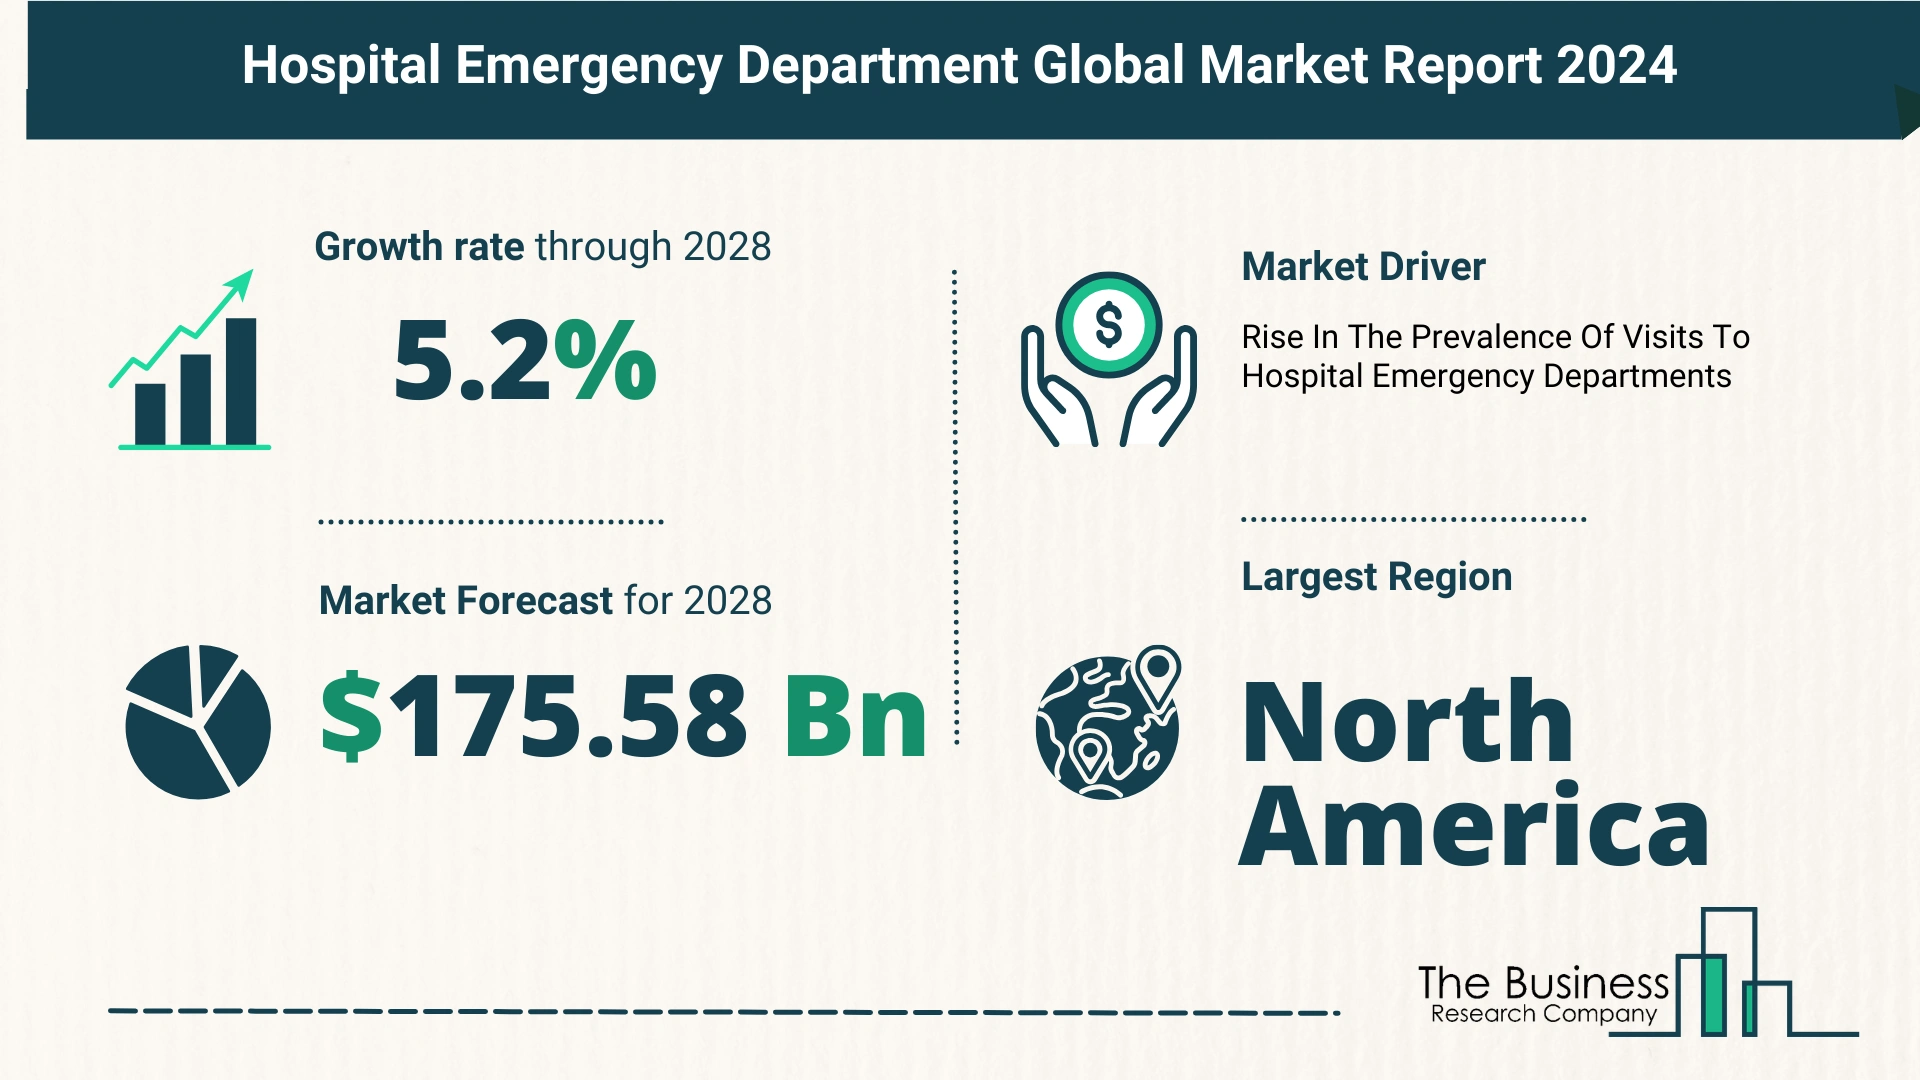 Hospital Emergency Department Market Forecast 2024: Forecast Market Size, Drivers And Key Segments